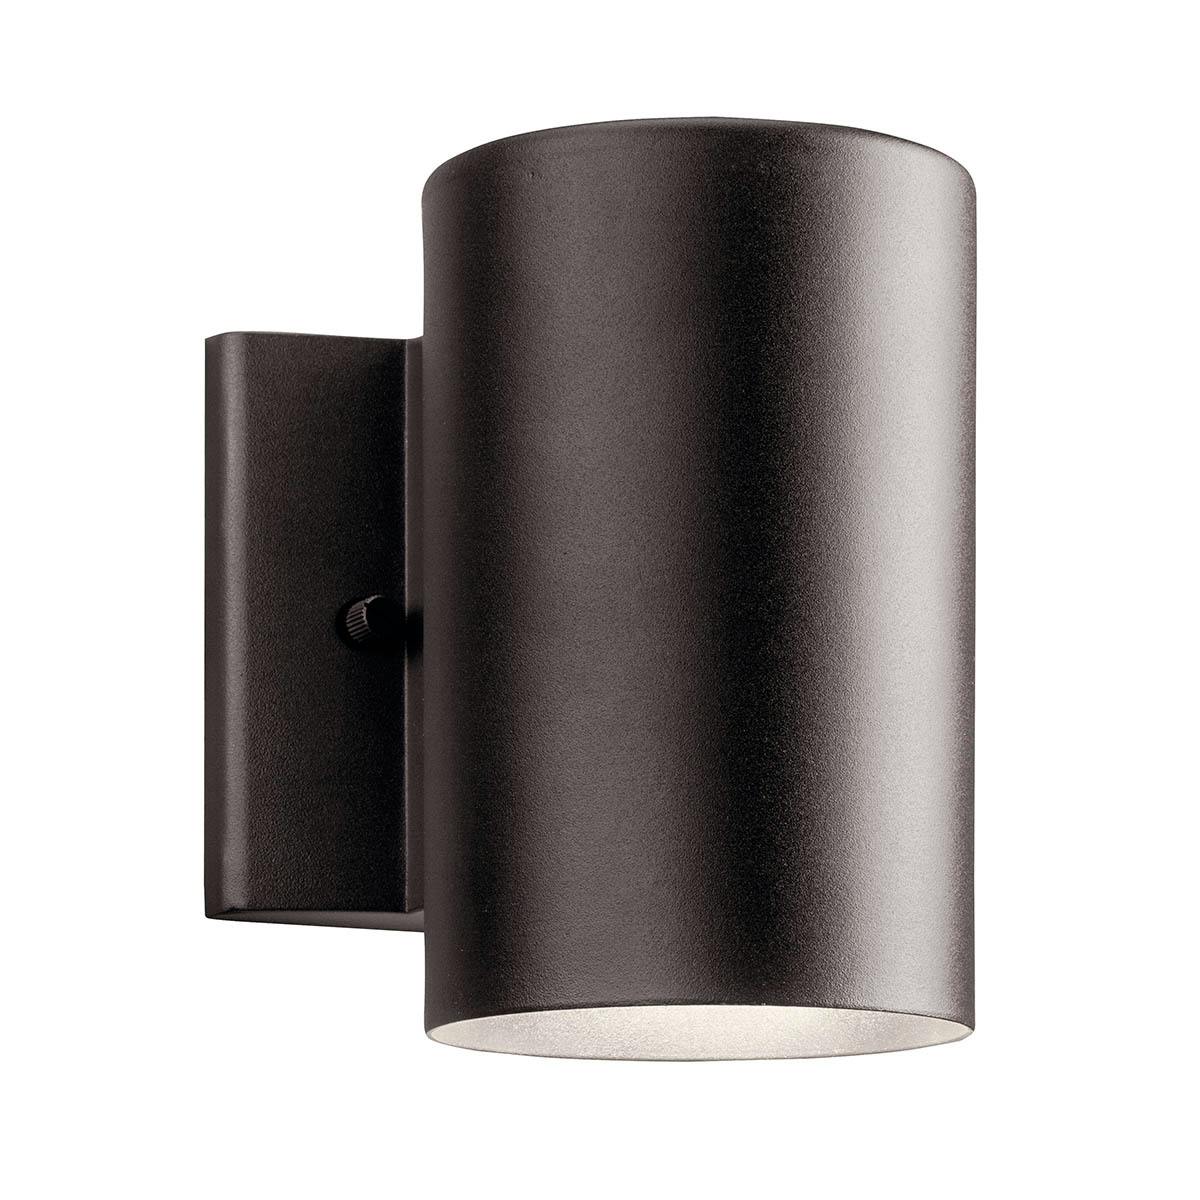 Cylinder 3000K LED 7" Wall Light Bronze on a white background